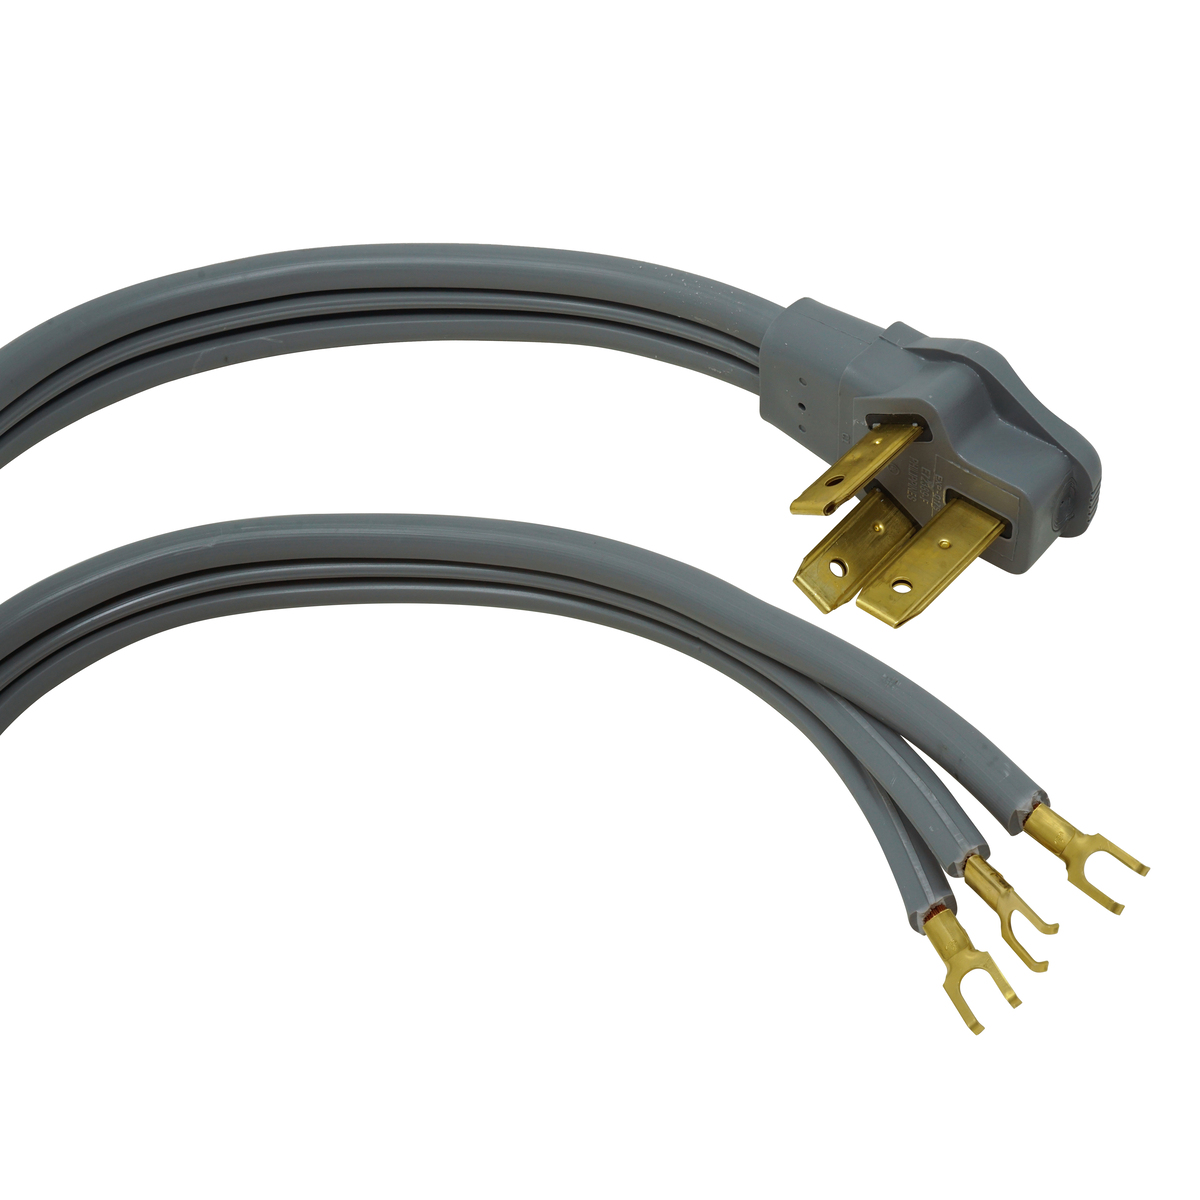 090148809 Cables & Cords 4' 3 Wire Range Cord